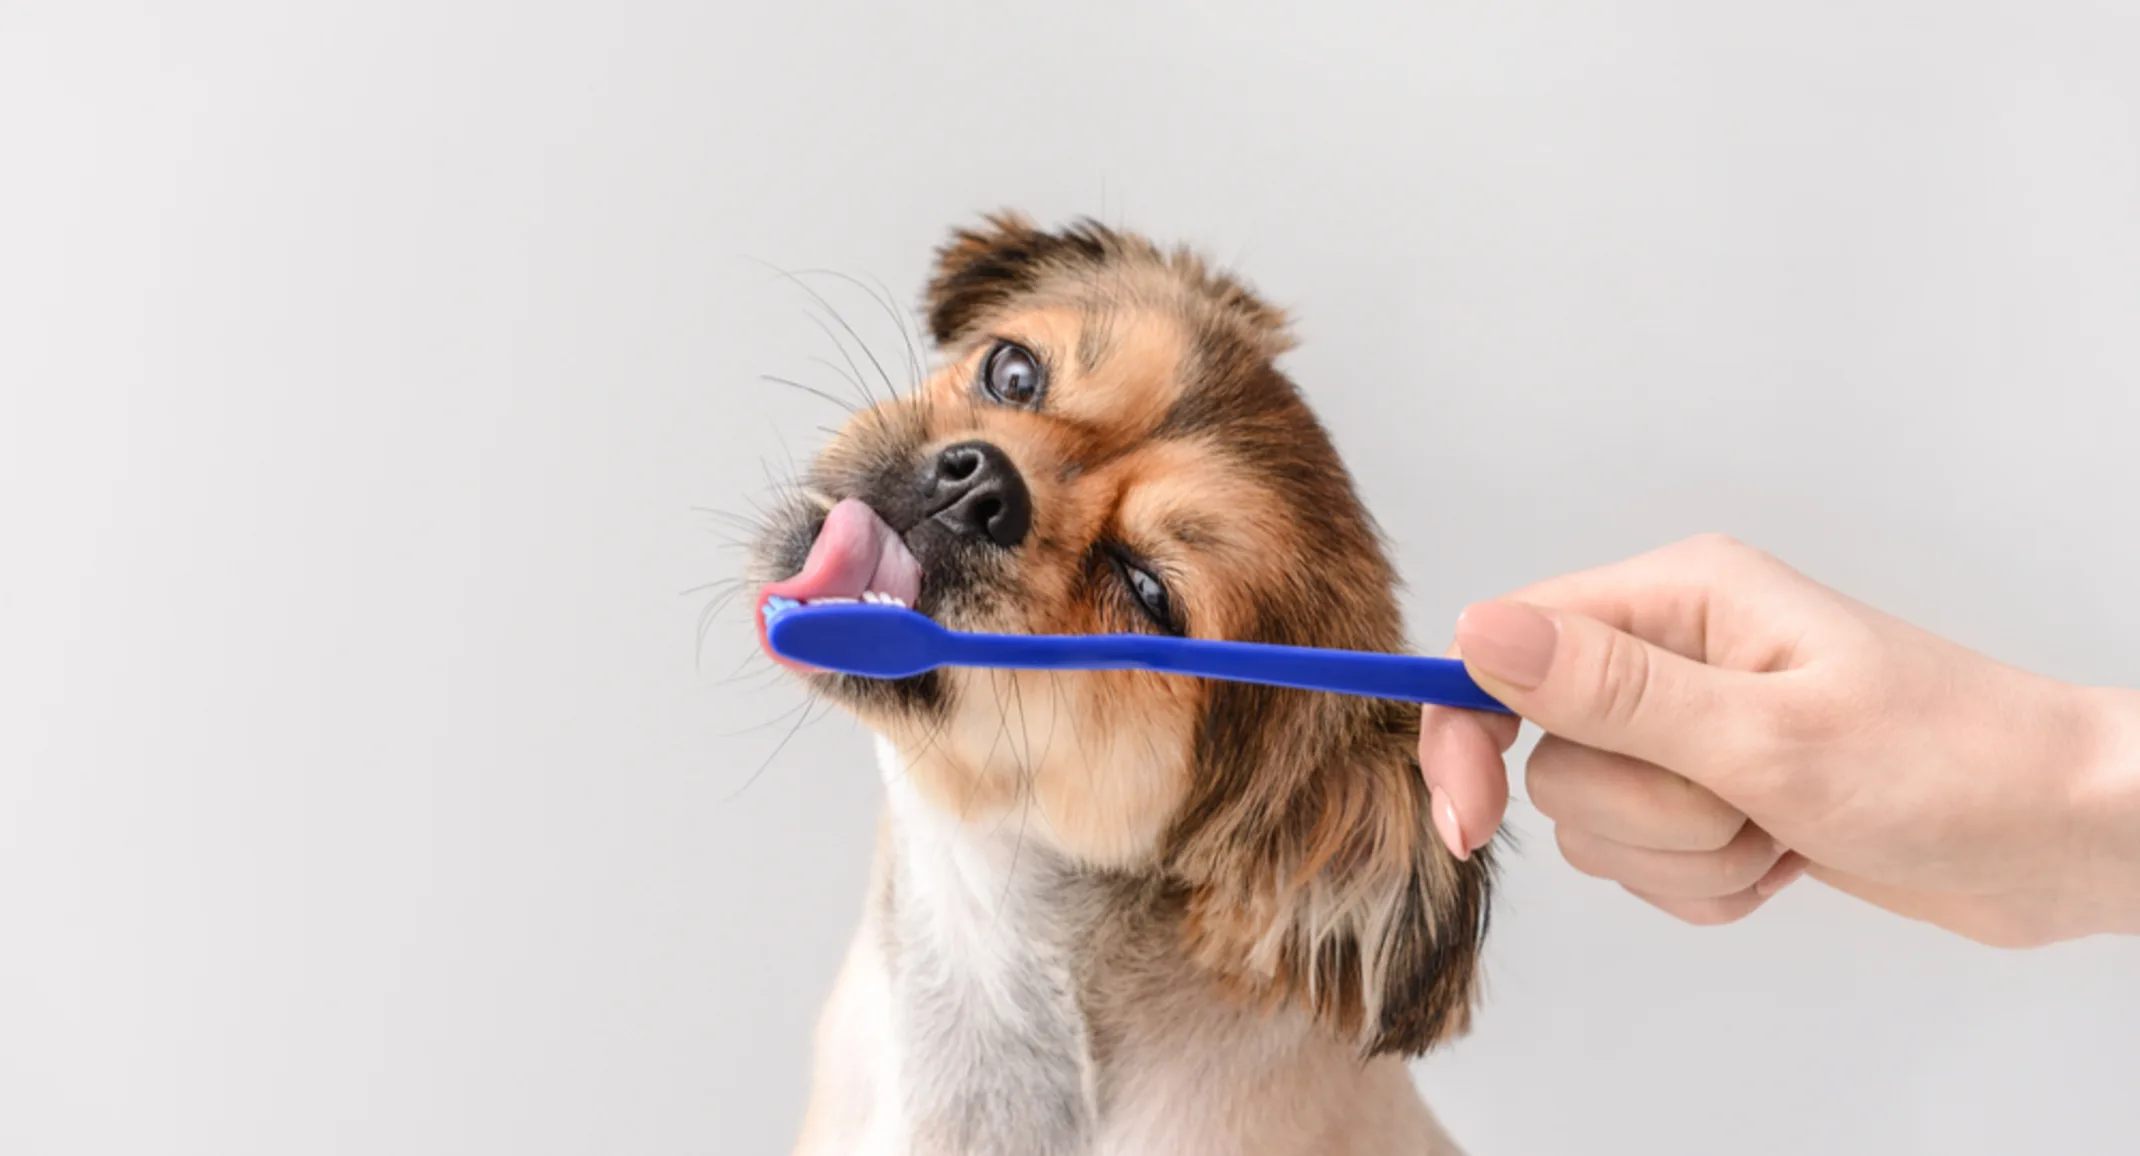 dog licking a toothbrush 